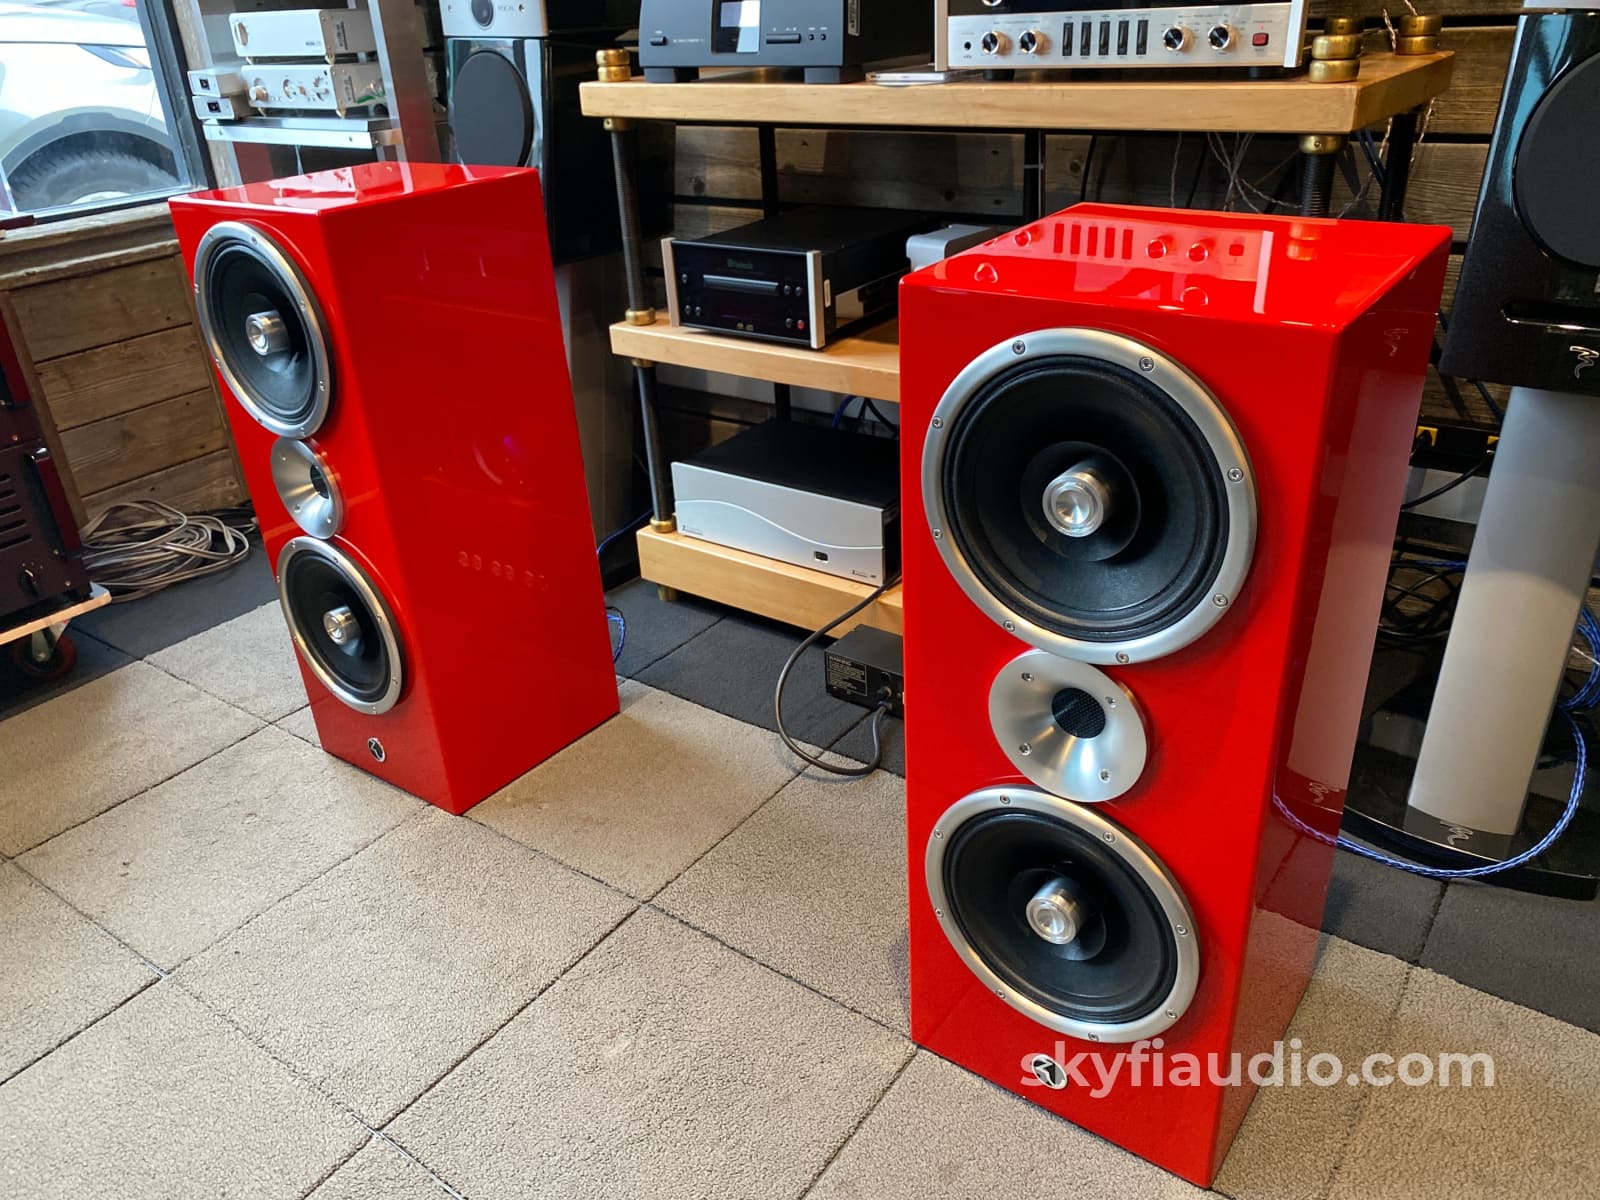 Zu Audio Defhead Speakers In Custom Red Finish - Rare!!